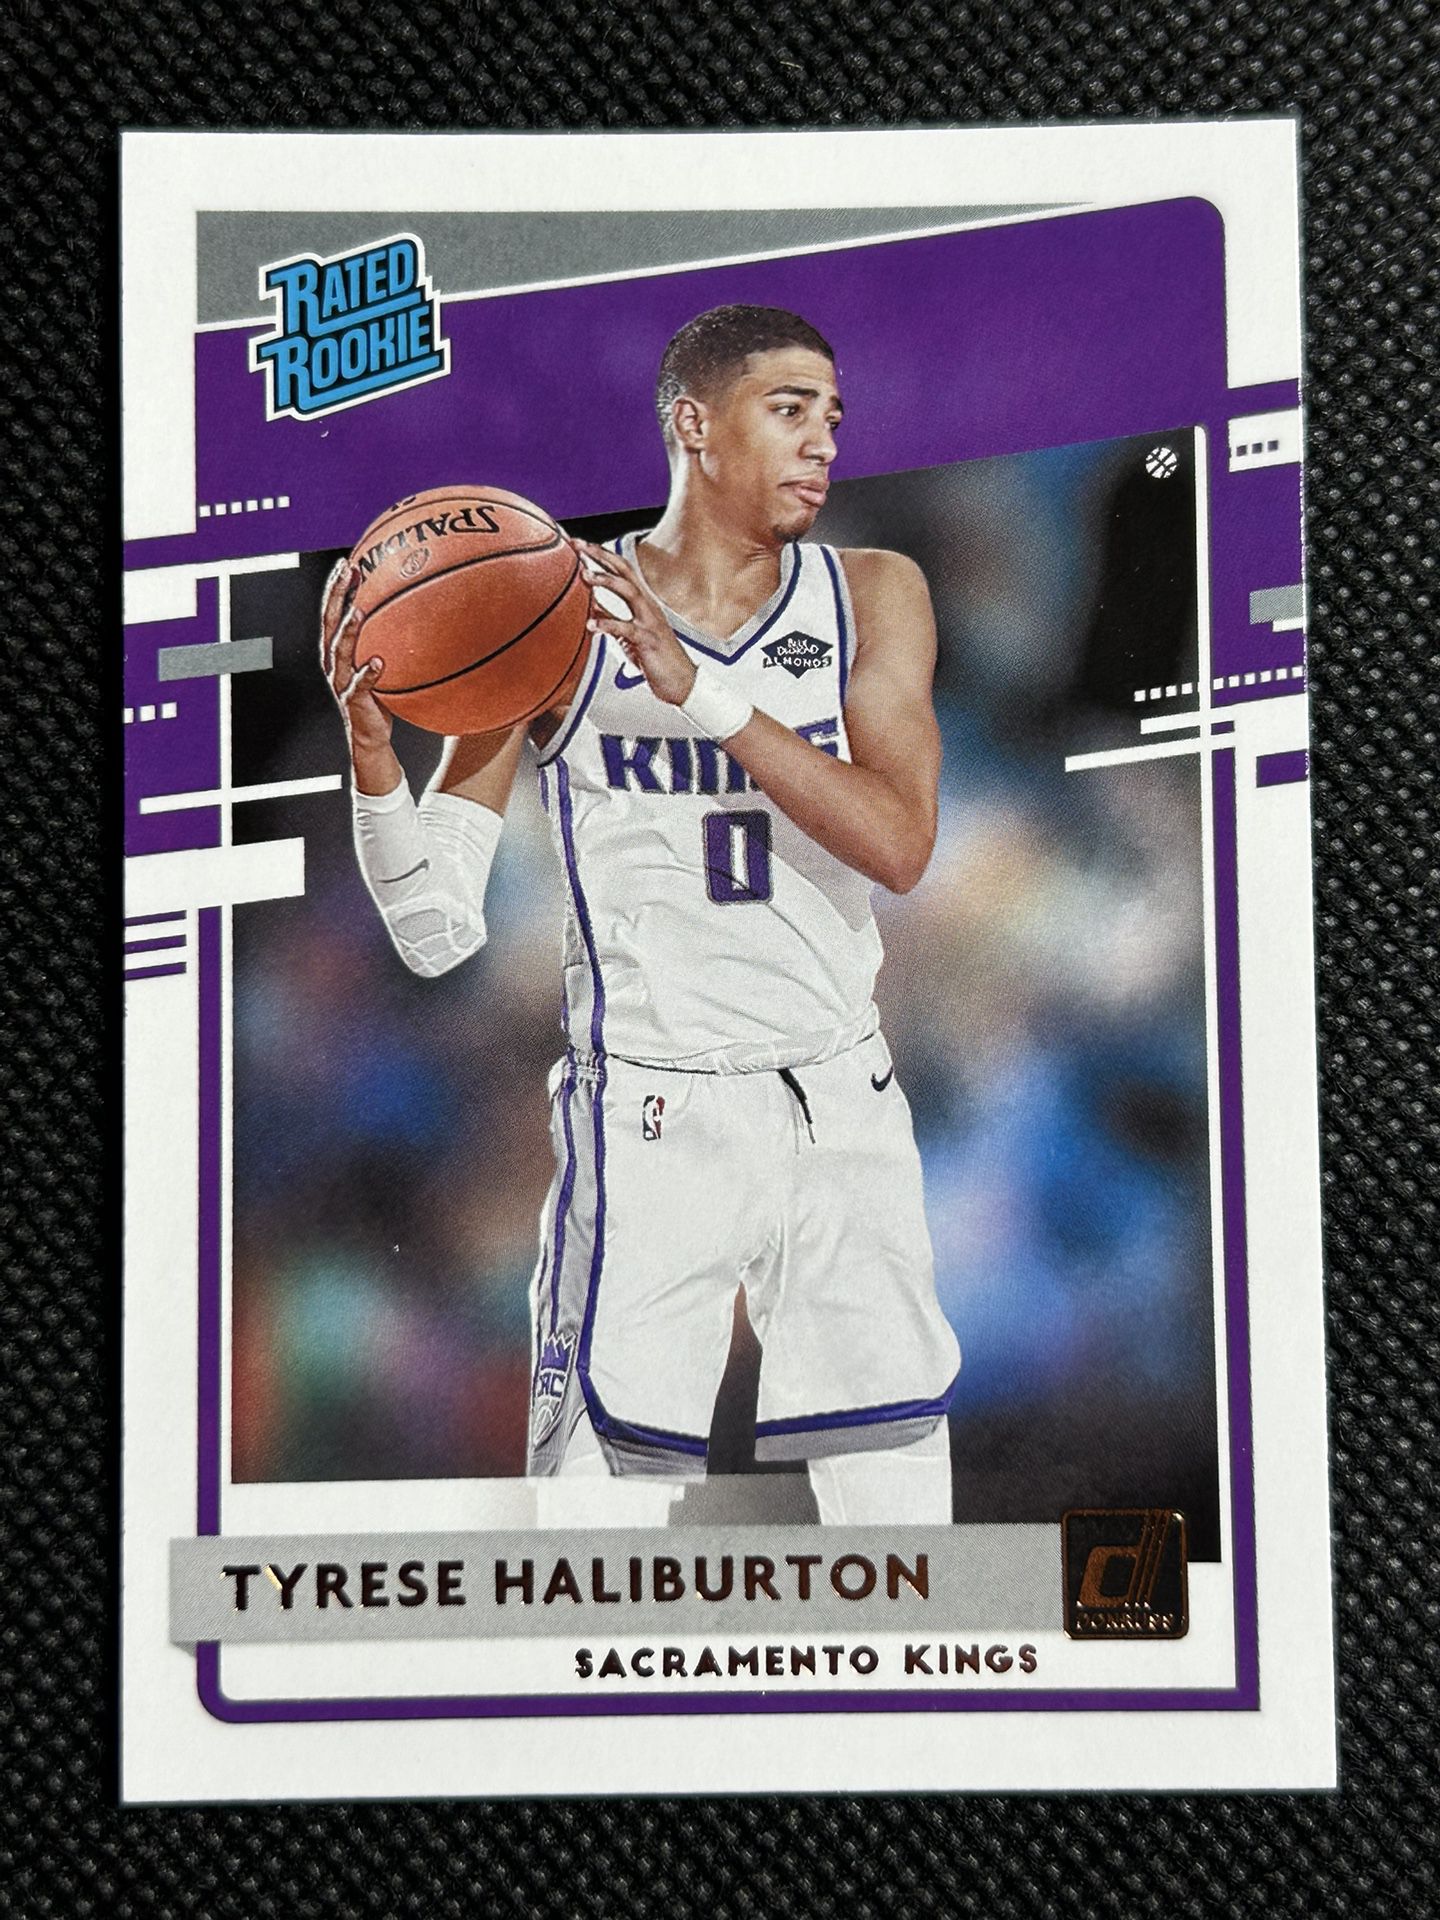 2020-21 Donruss Tyrese Haliburton Rated Rookie Card RC #231 Indiana Pacers 🔥🔥